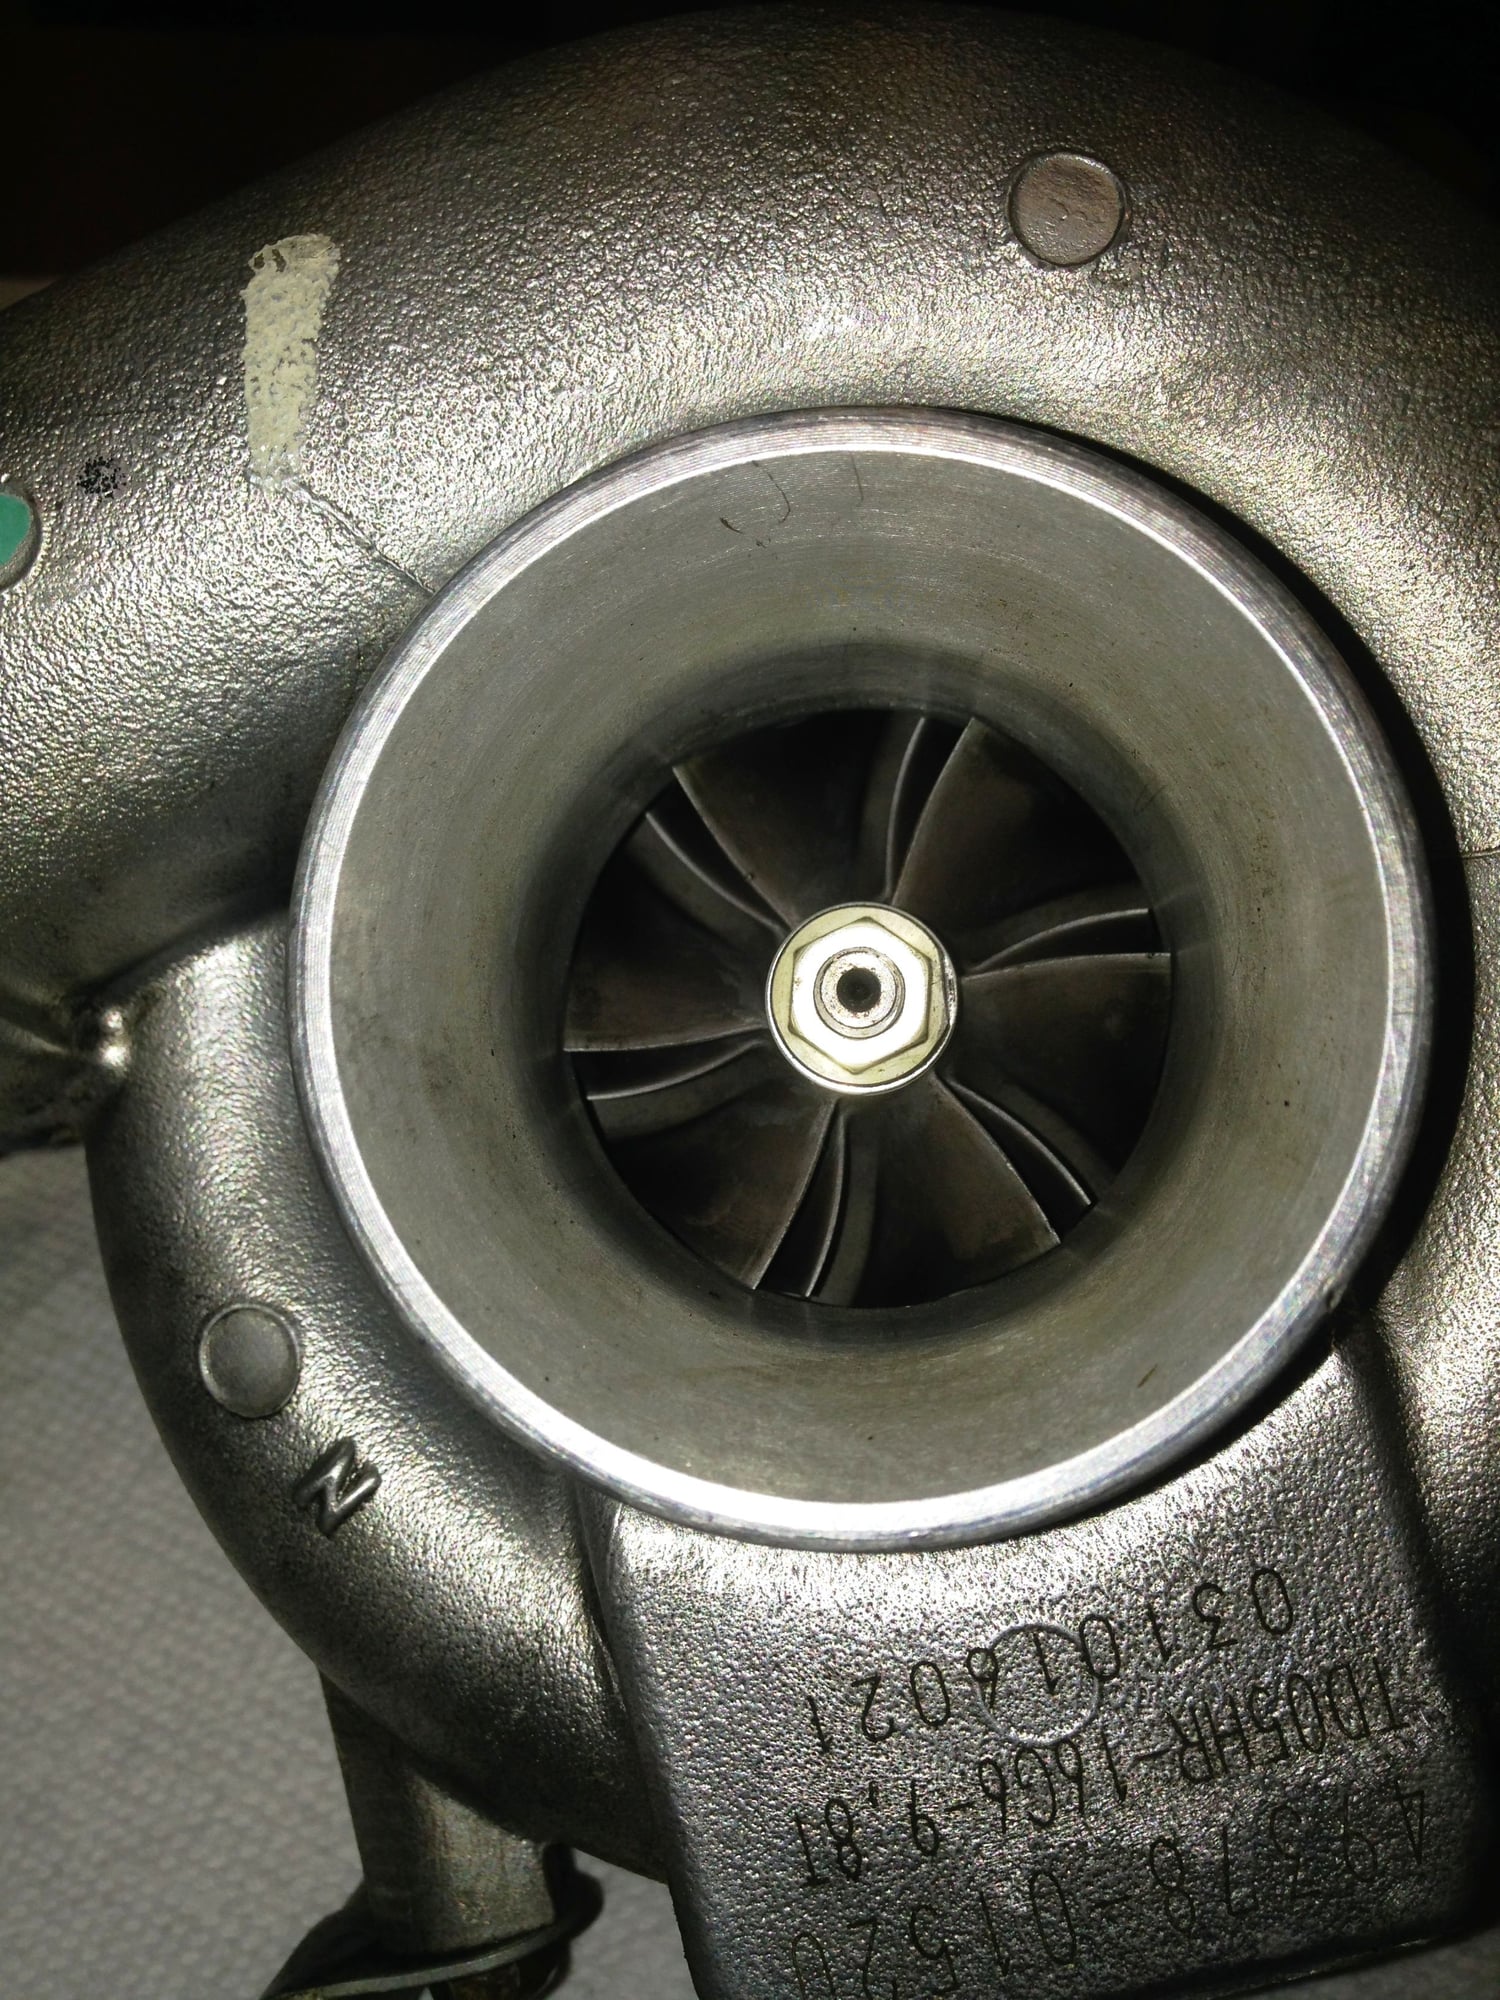 Engine - Power Adders - Stock OEM EVO VIII Turbo For Sale - Used - 2003 to 2004 Mitsubishi Lancer Evolution - Eureka, MO 63025, United States